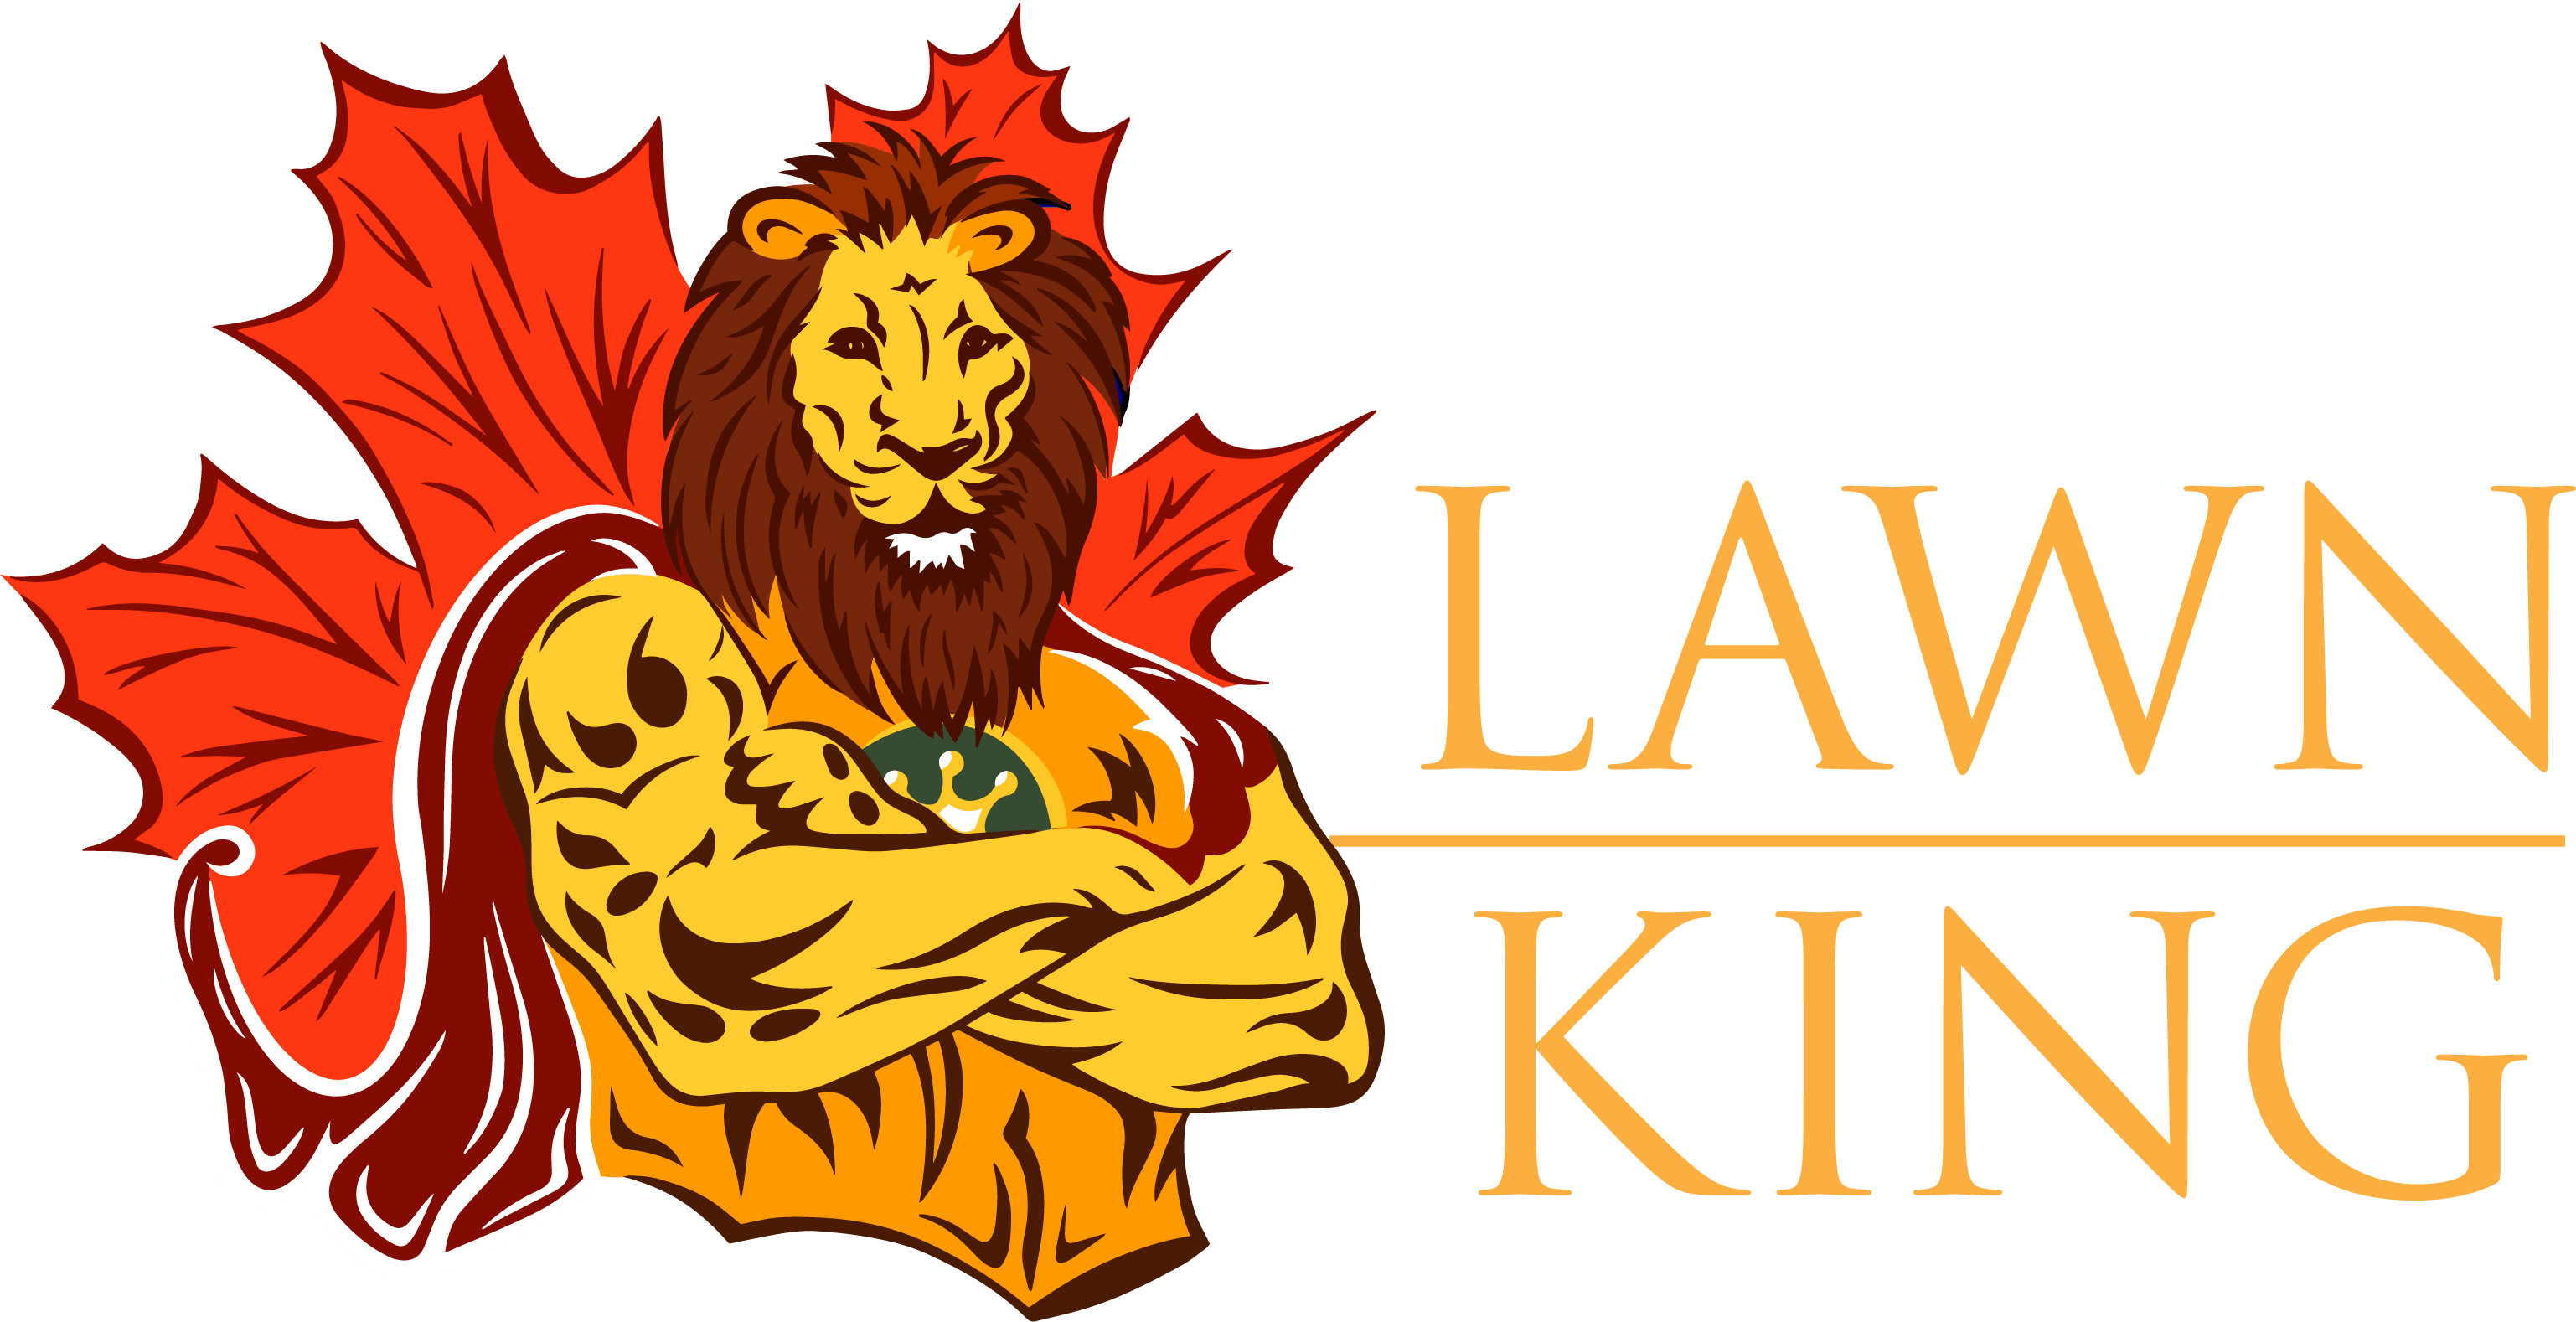 Lawn Maintenance Professional - Lawn King